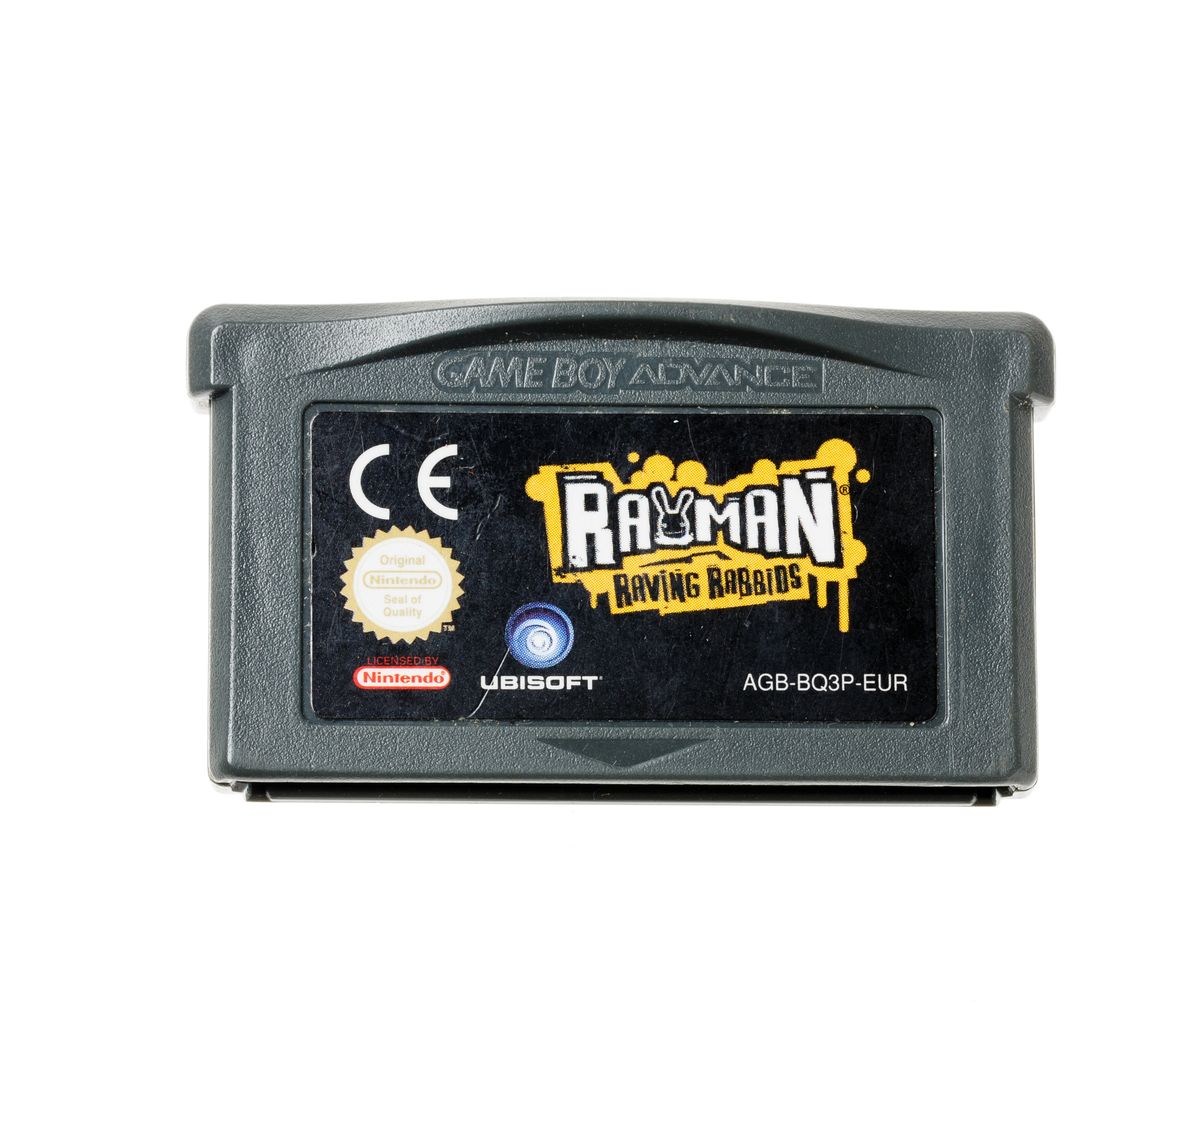 Rayman Raving Rabbids - Gameboy Advance Games